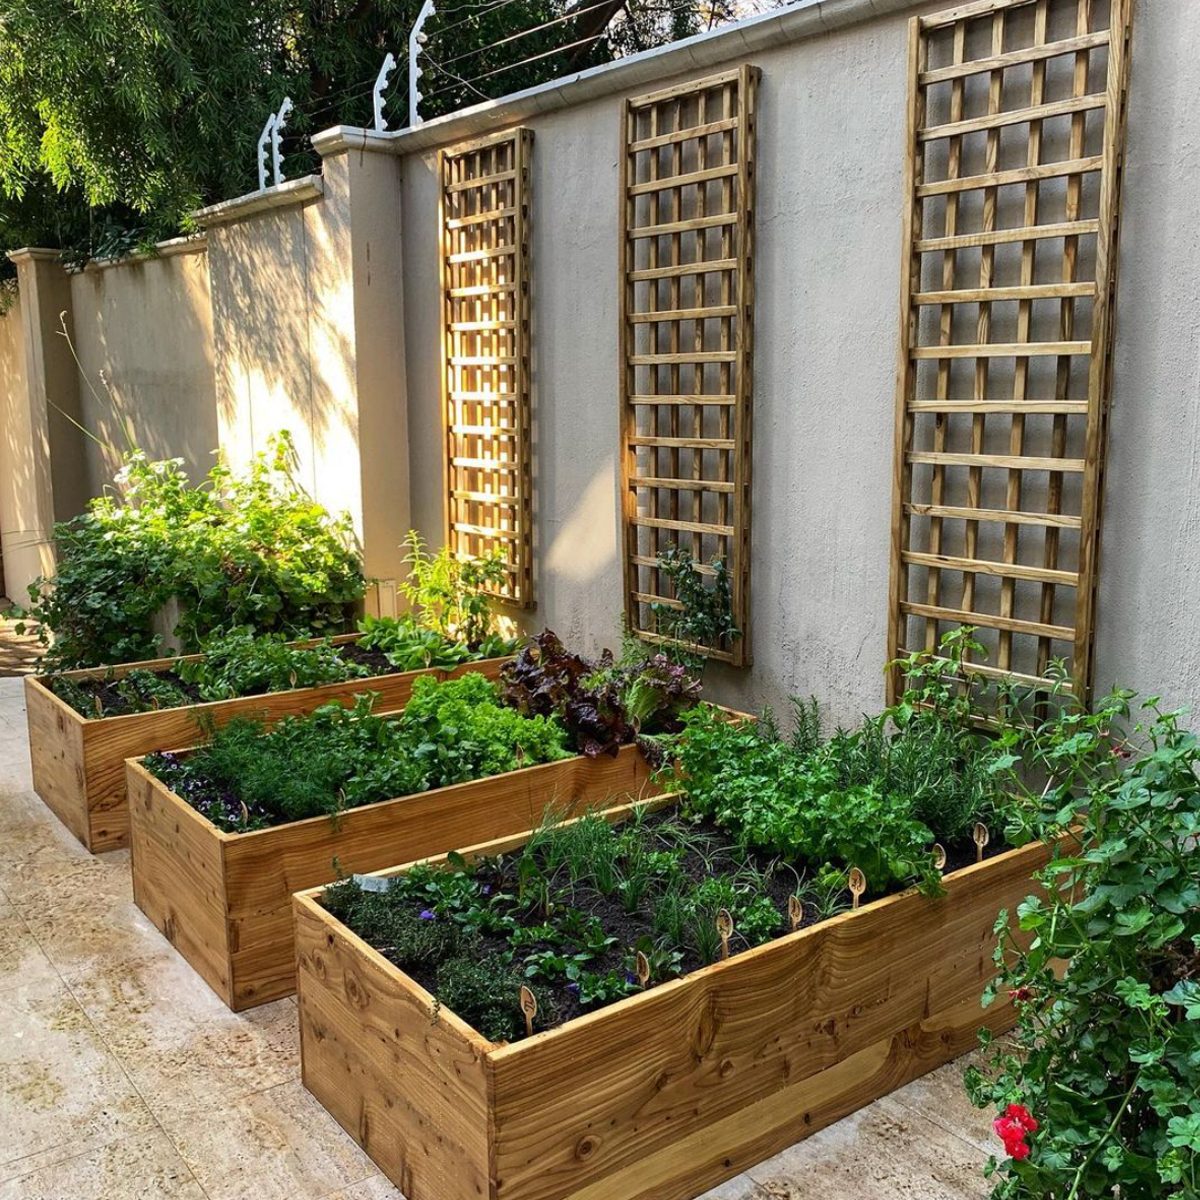 11 Vegetable Garden Ideas | The Family Handyman